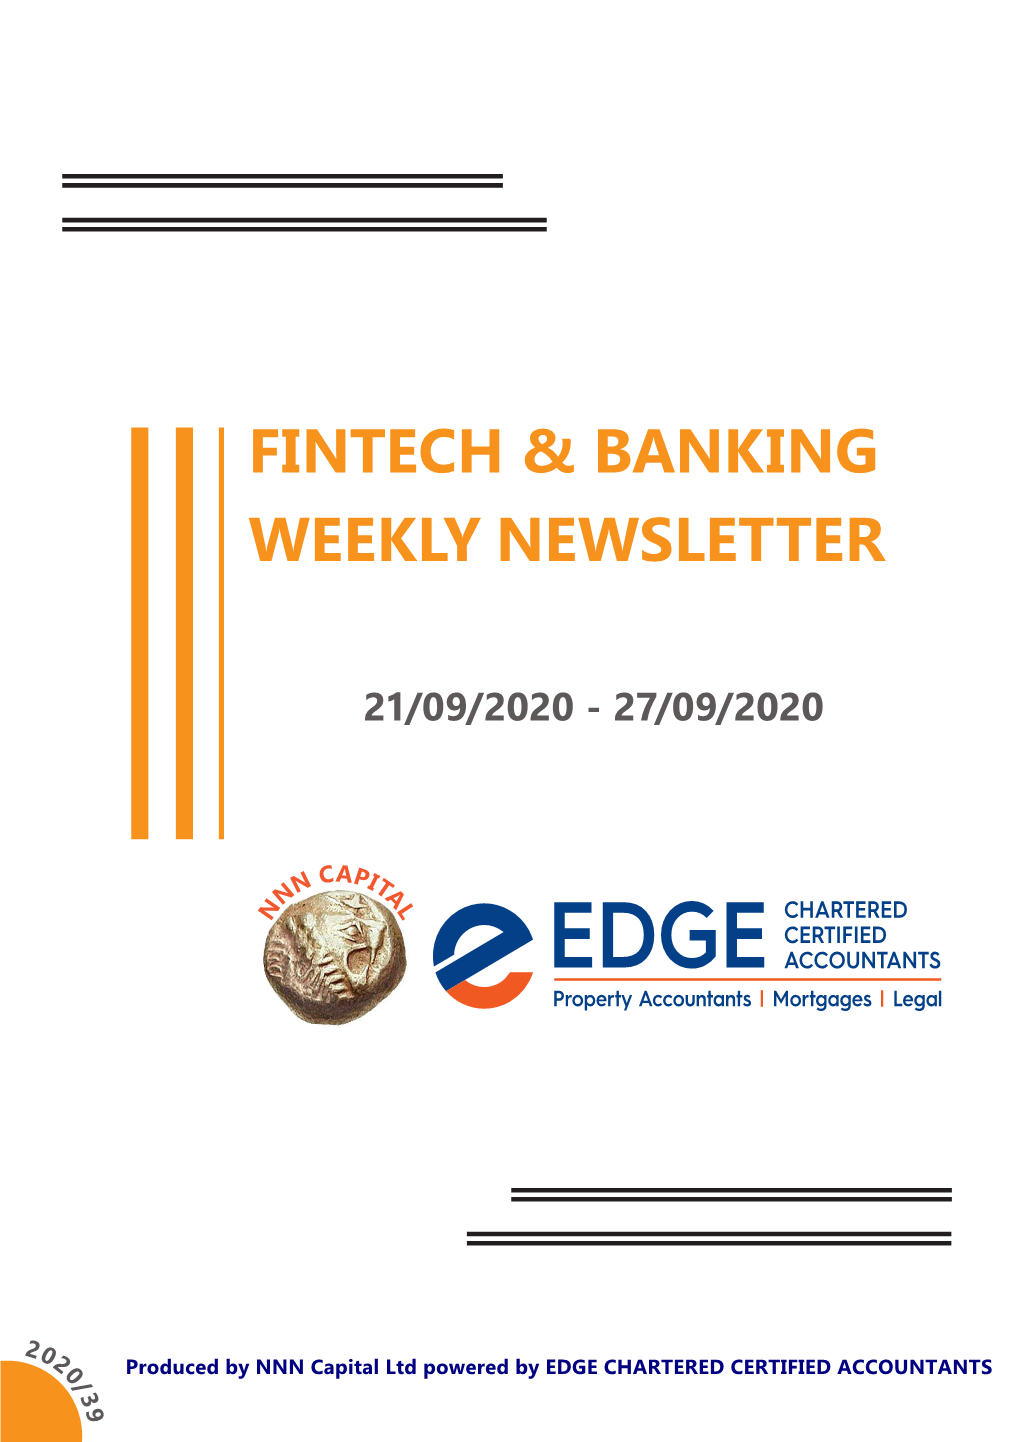 Fintech & Banking Weekly Newsletter